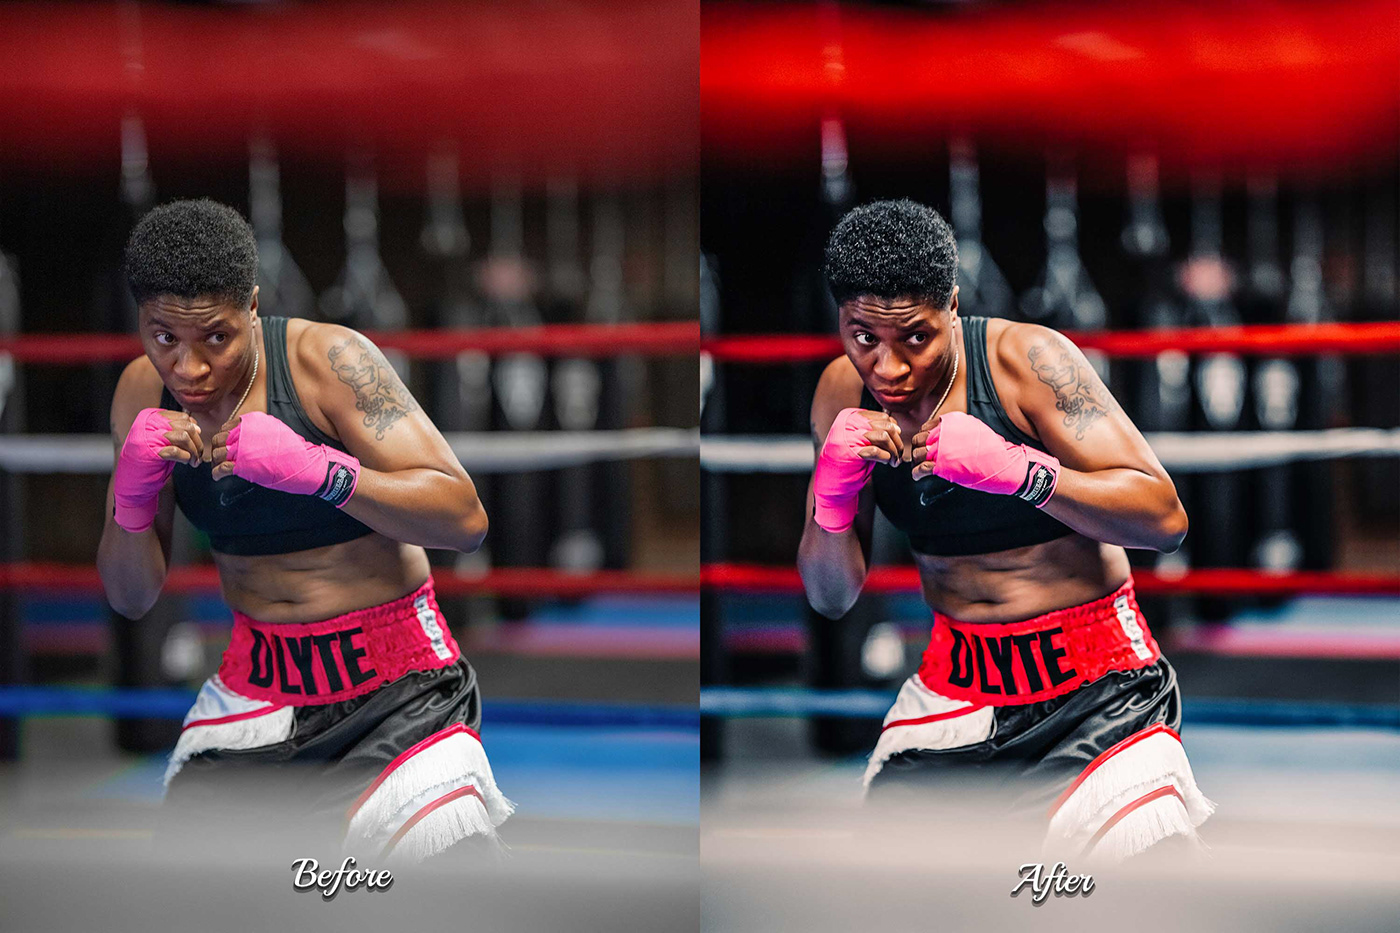 lightroom presets combat sports instagram posts Desktop Presets Boxing Presets Boxing Rings Fighter photos Martial Sports Sports Bloggers Vibrant Styles